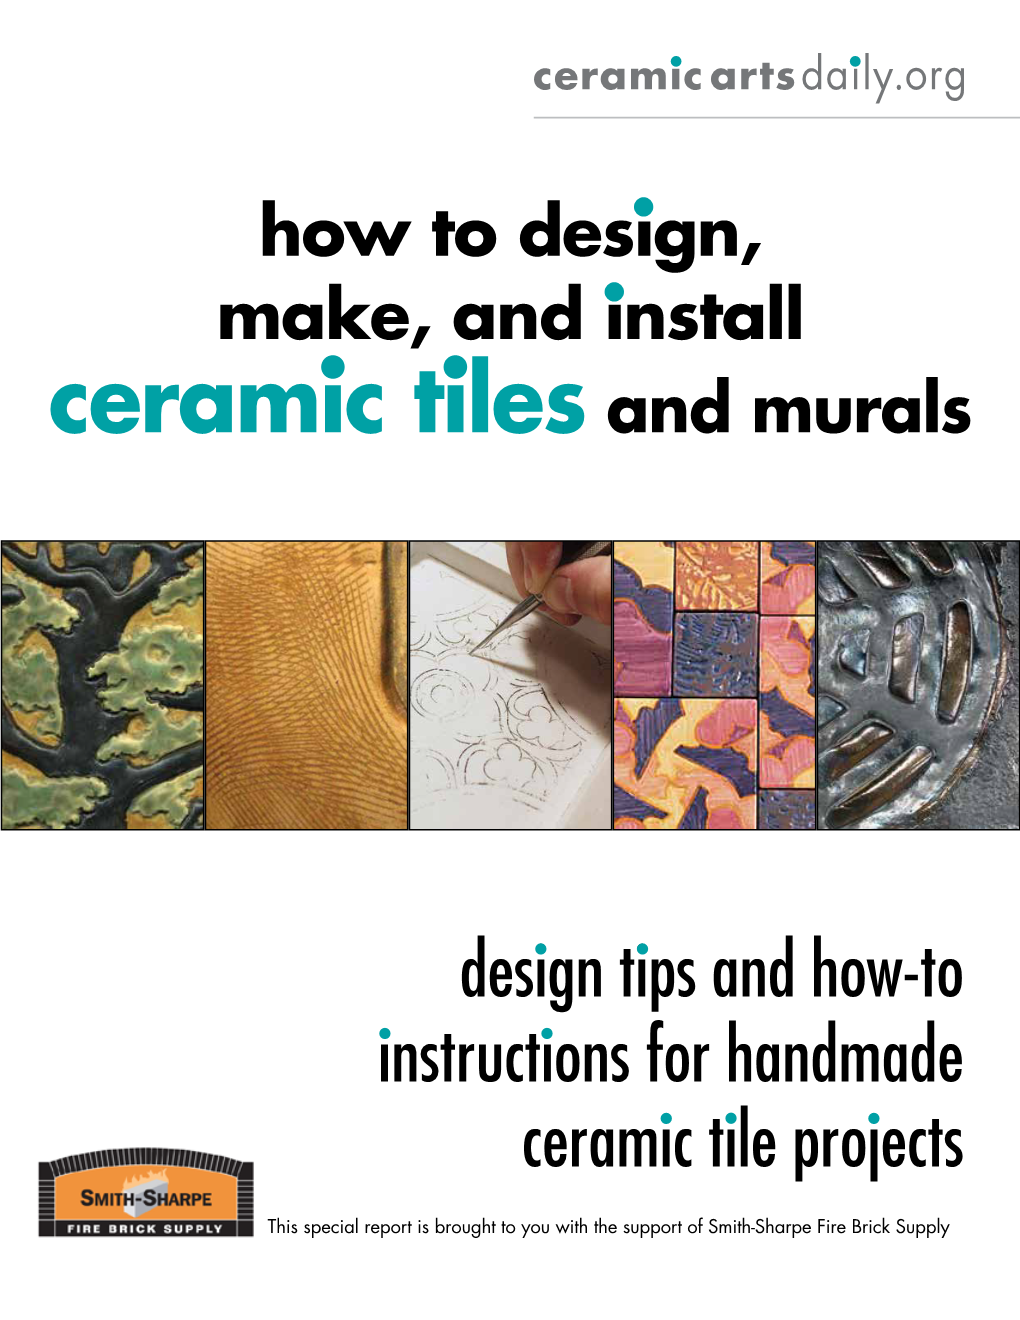 Ceramic Tiles and Murals